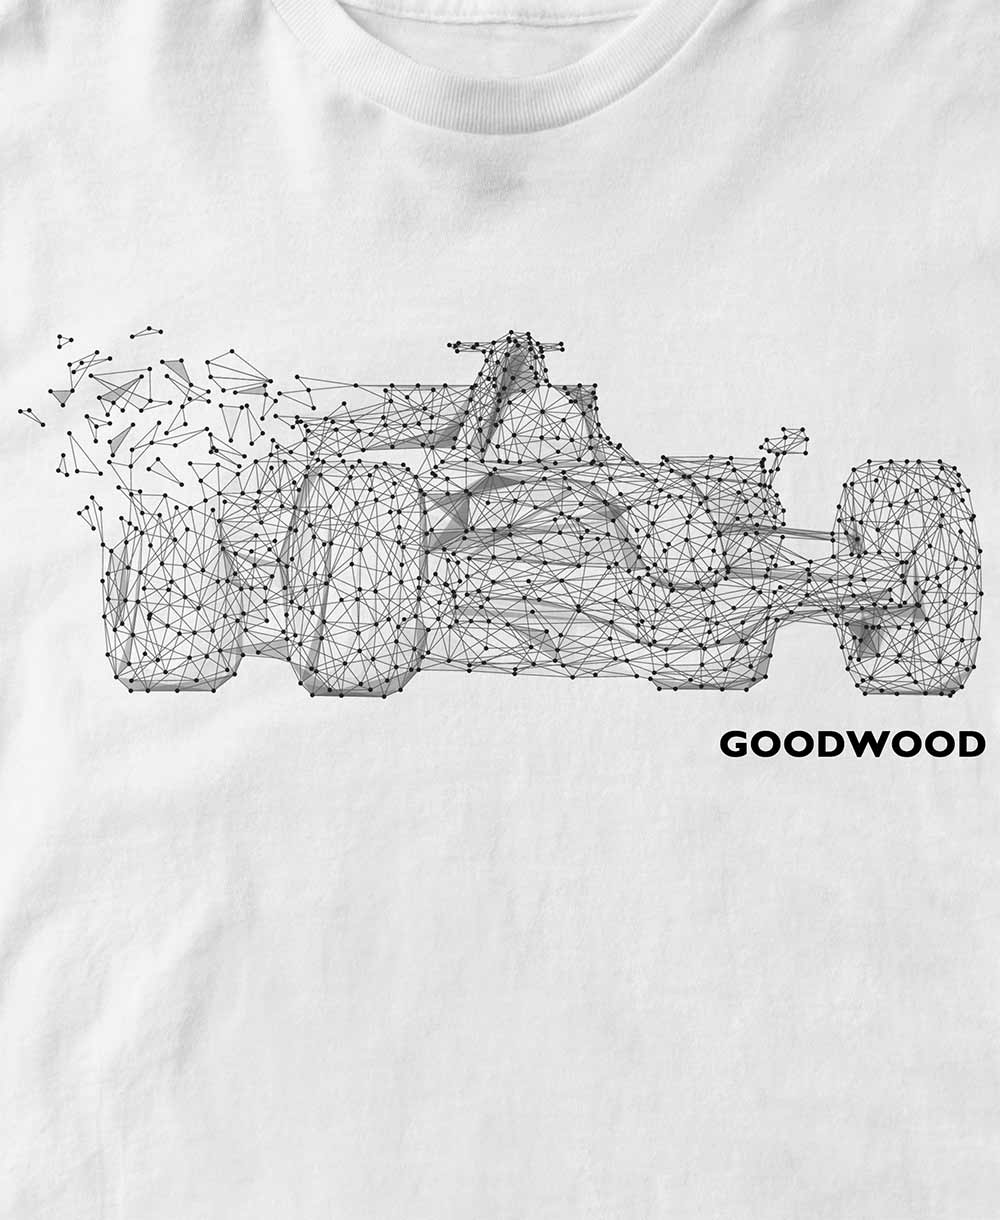 Goodwood Festival of Speed Abstract F1 White Children's Motorsport T-Shirt